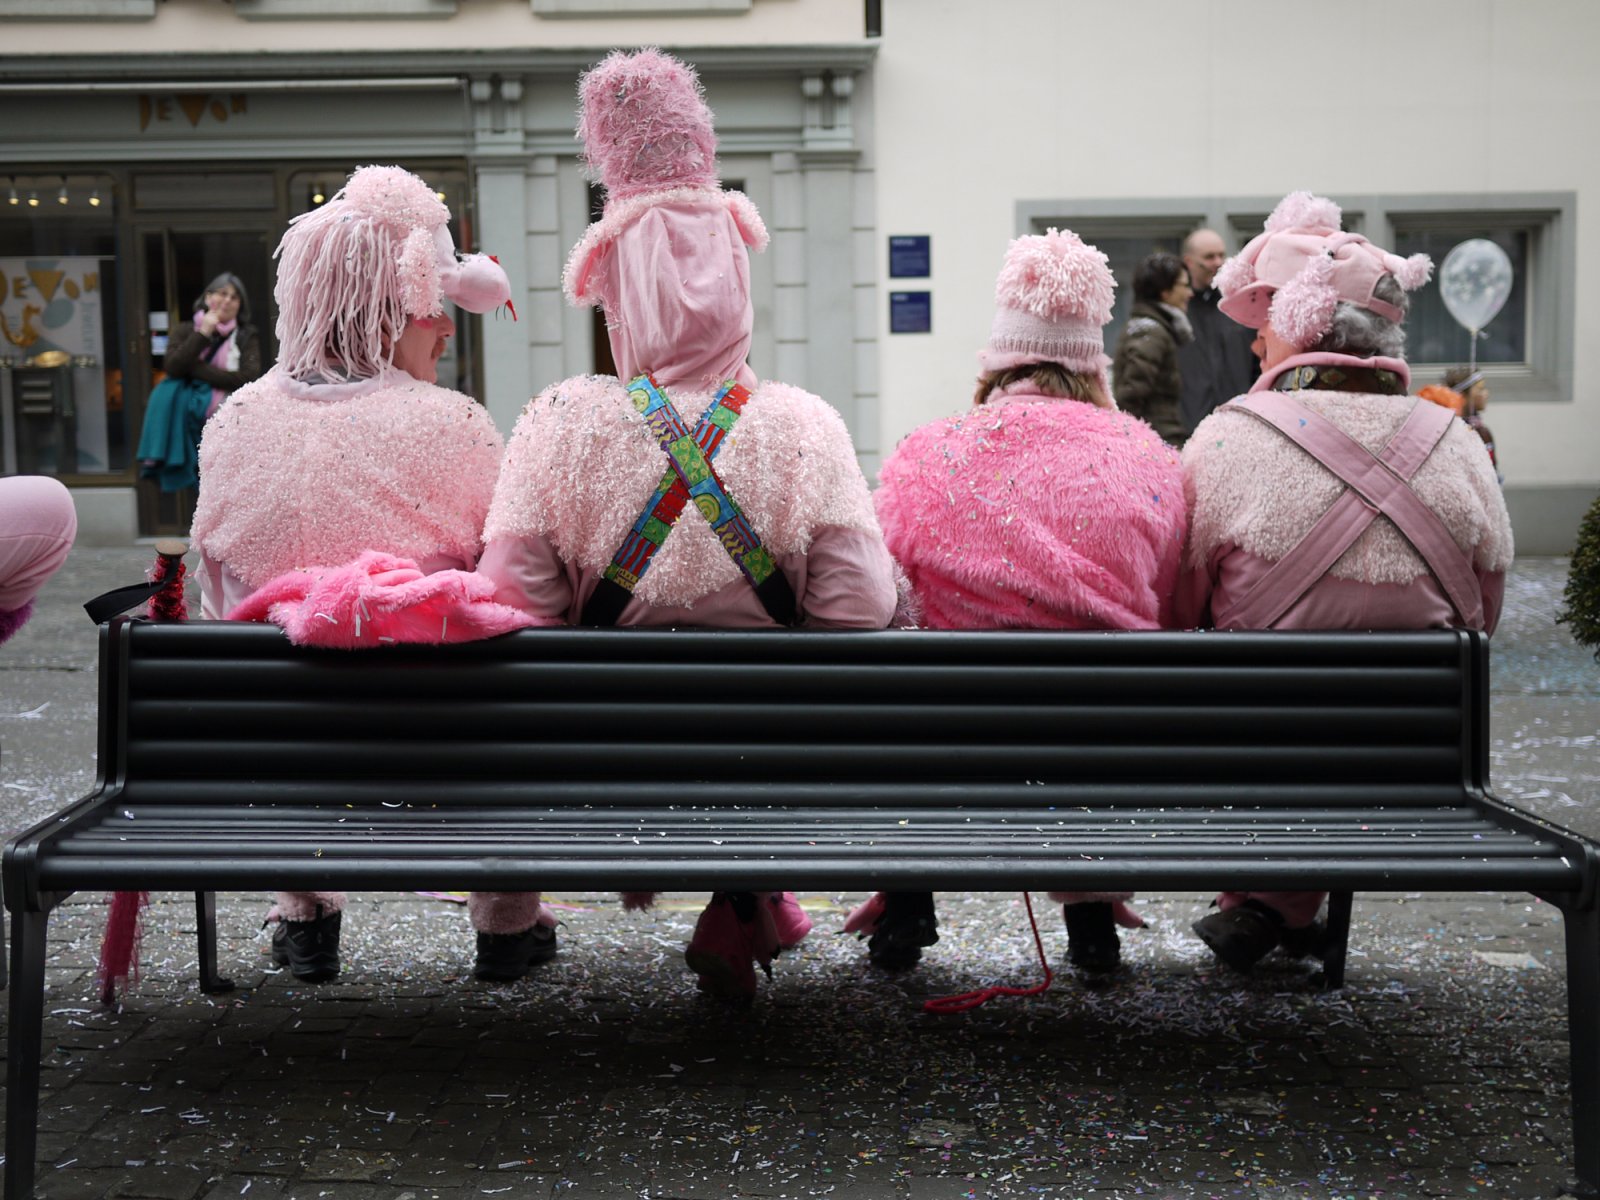 ZüriCarneval Zurich Carnival Pig Costumes